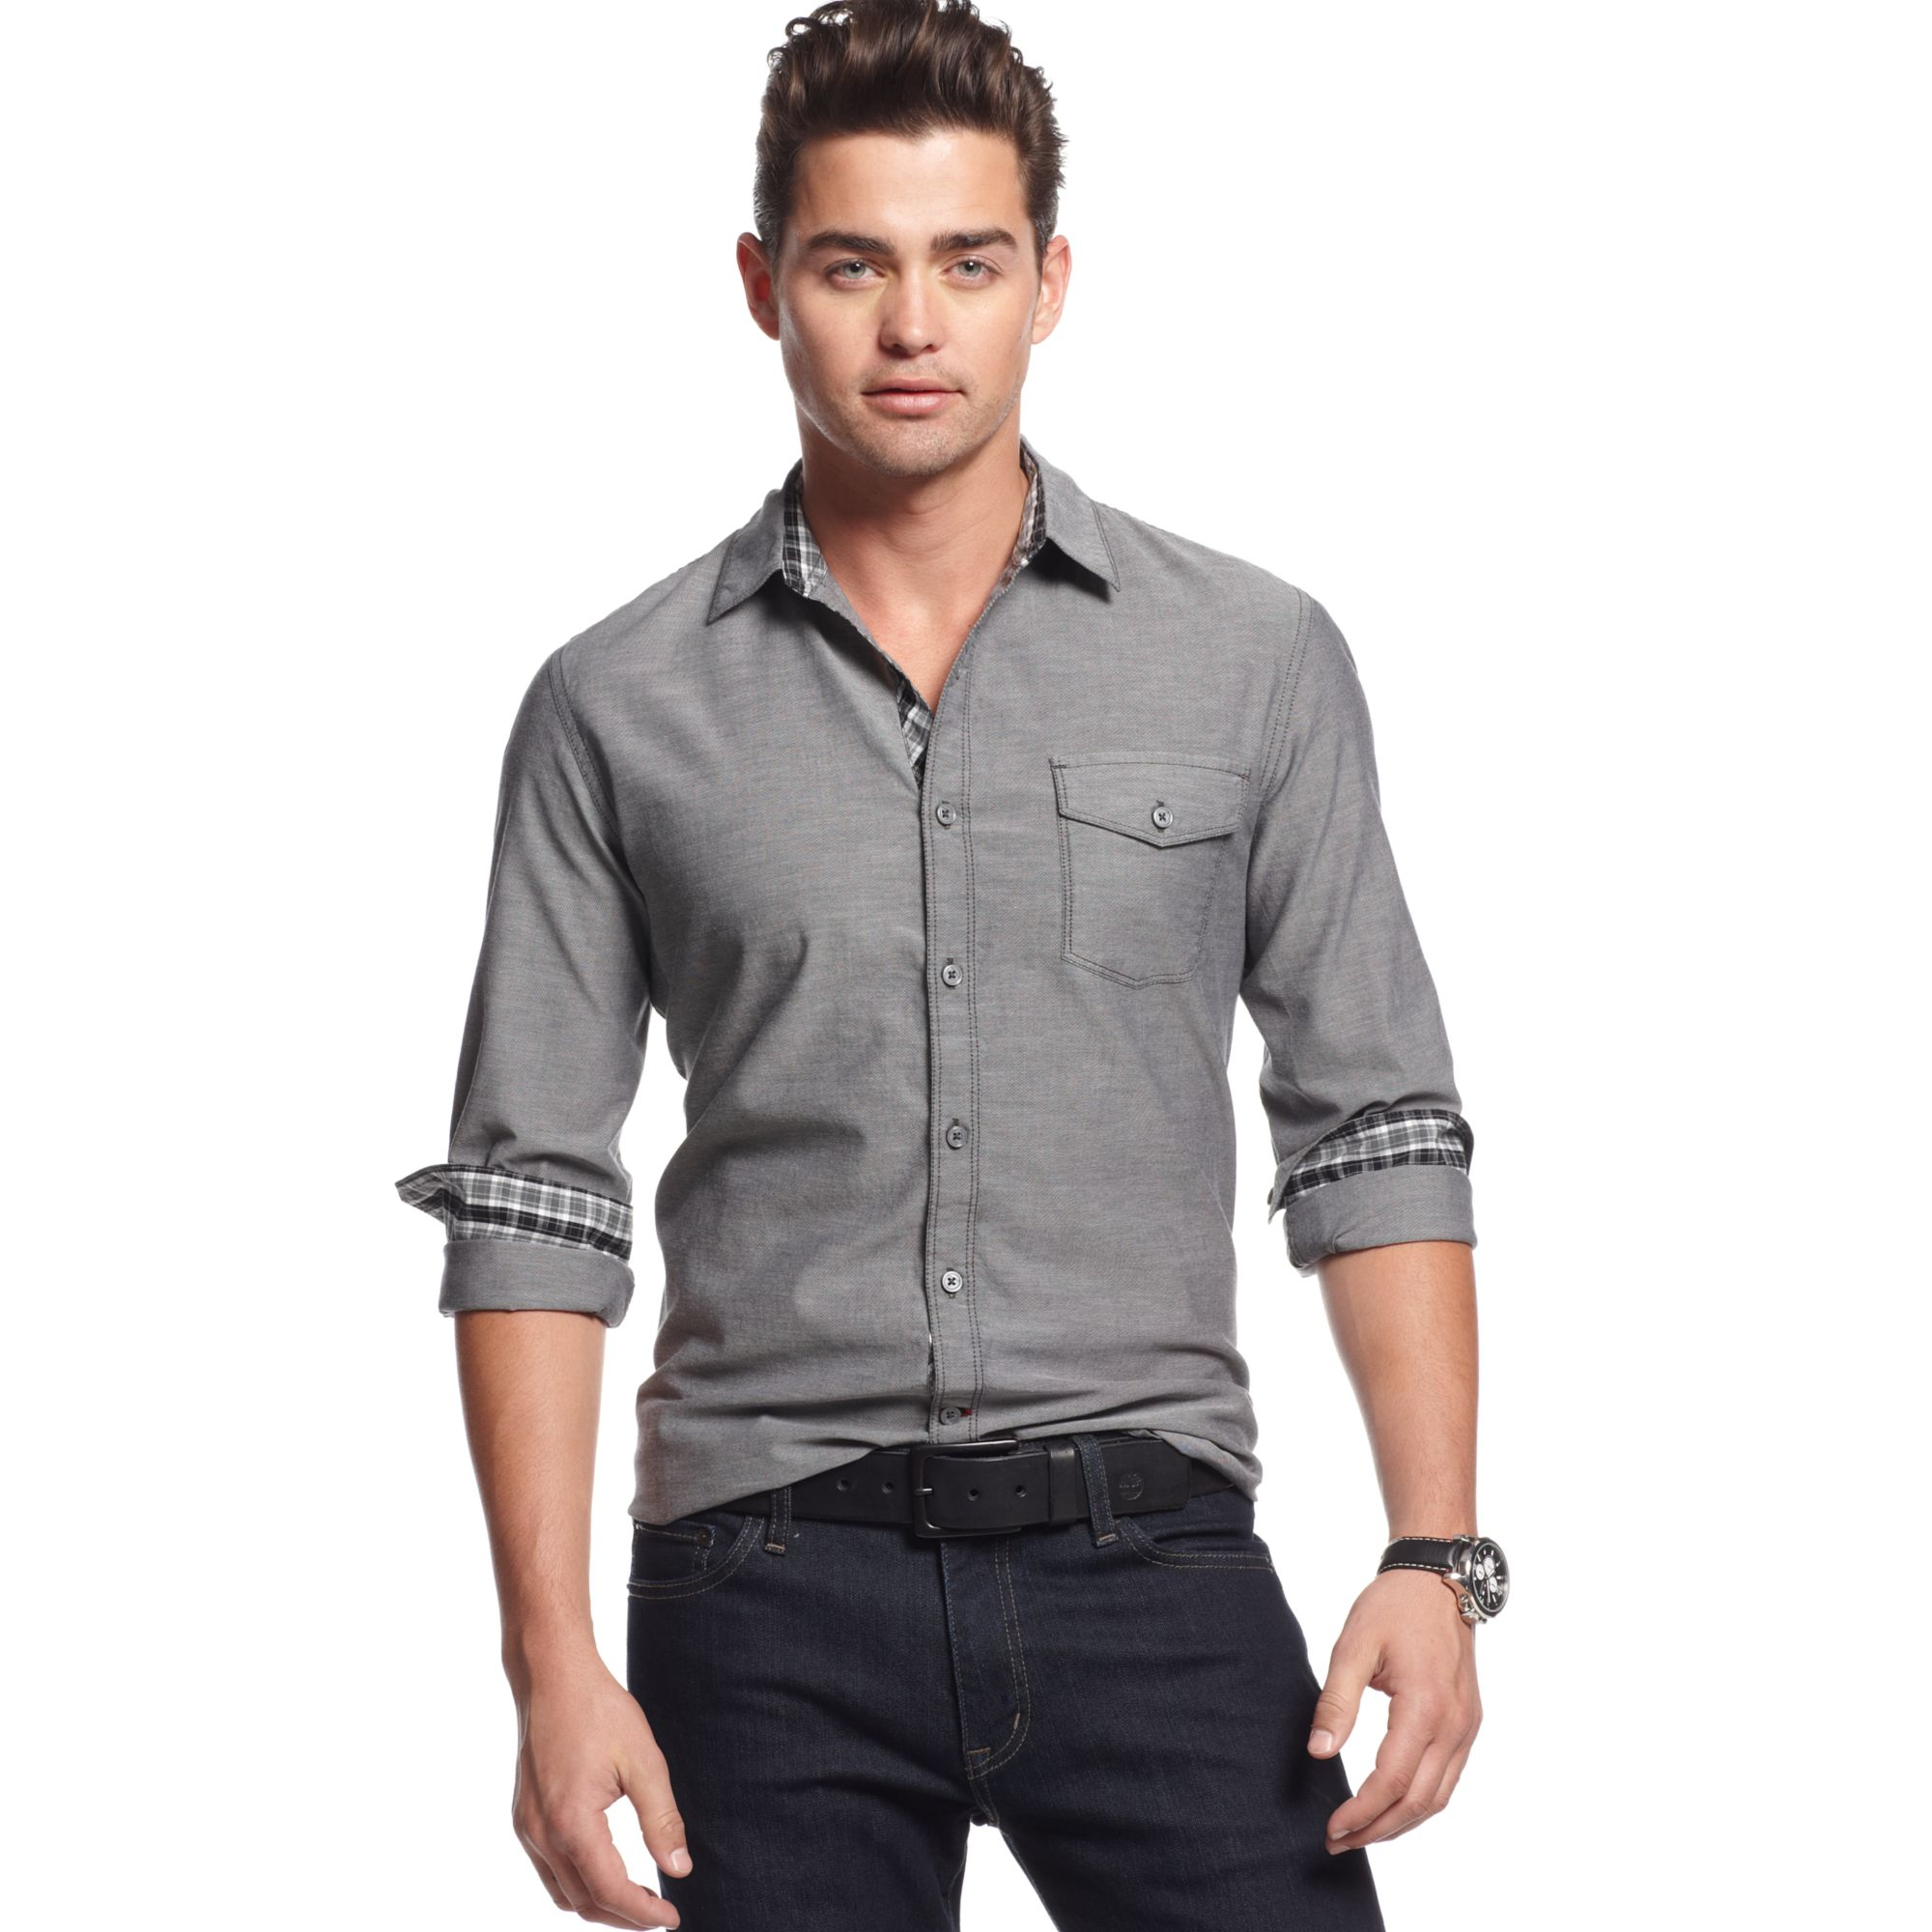 Lyst - Guess Logan Contrast Cuff Buttondown Shirt in Gray for Men